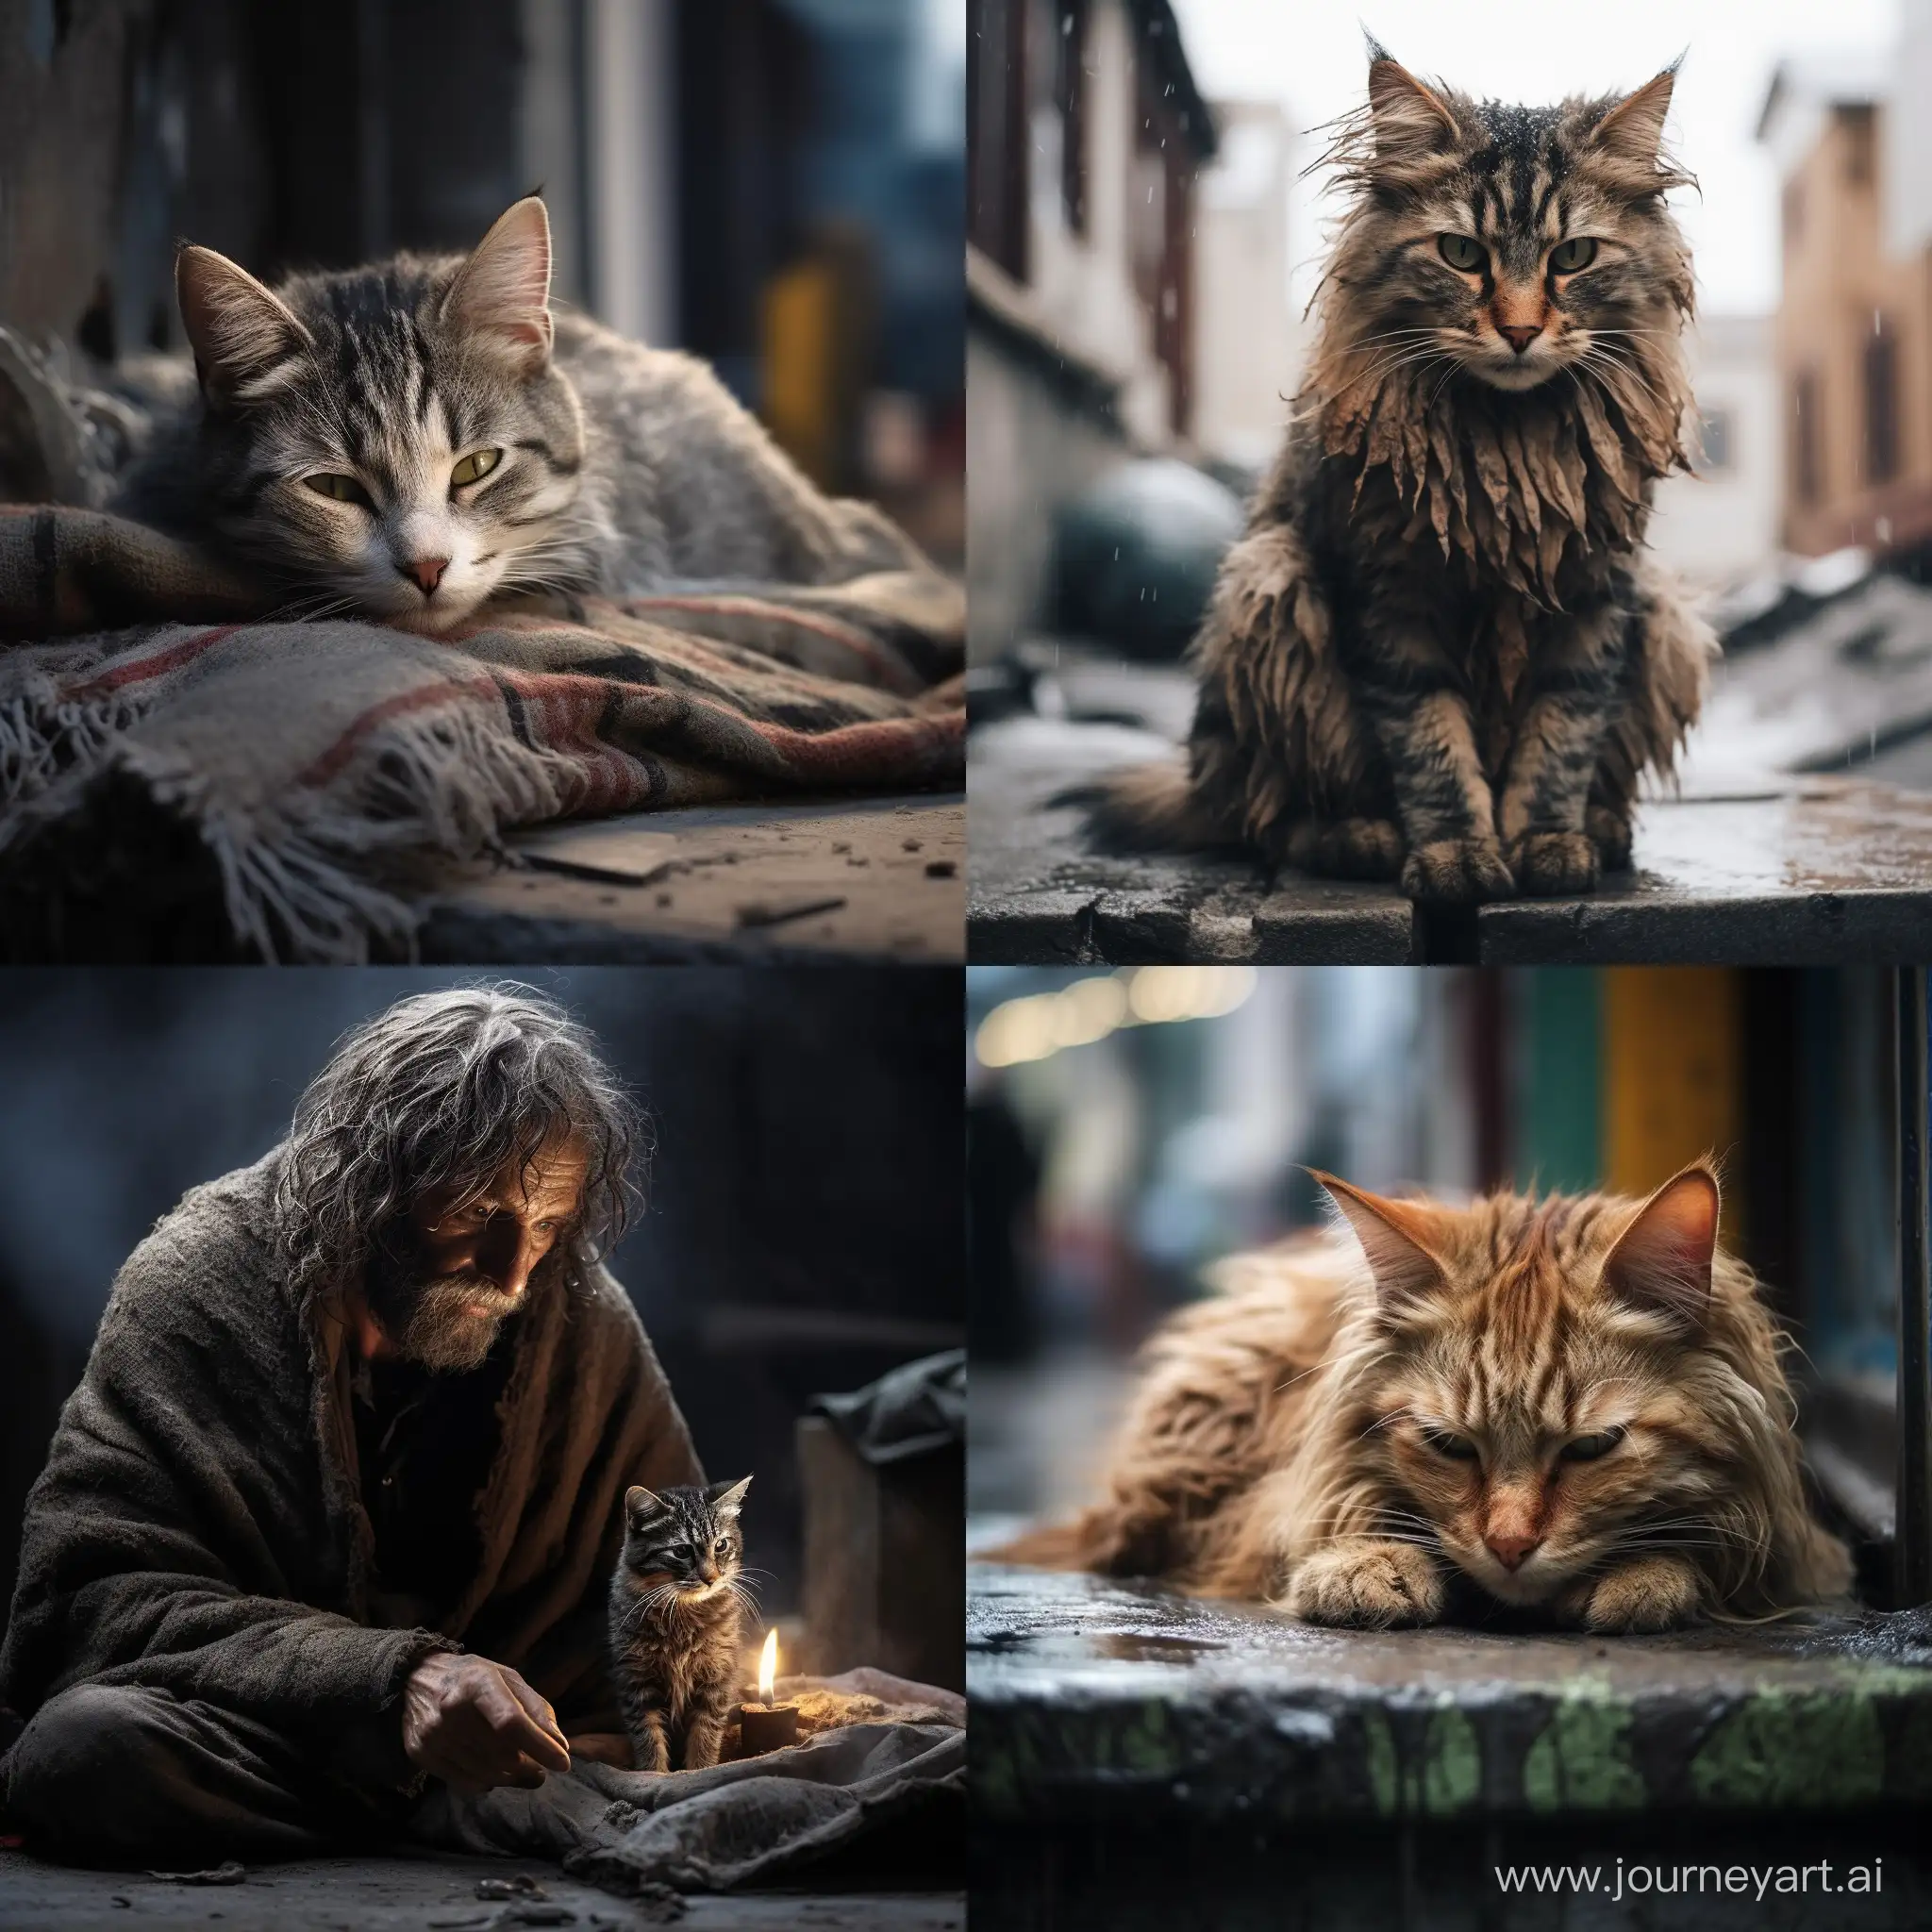 Thin-Man-Throwing-Stone-at-Homeless-Cat